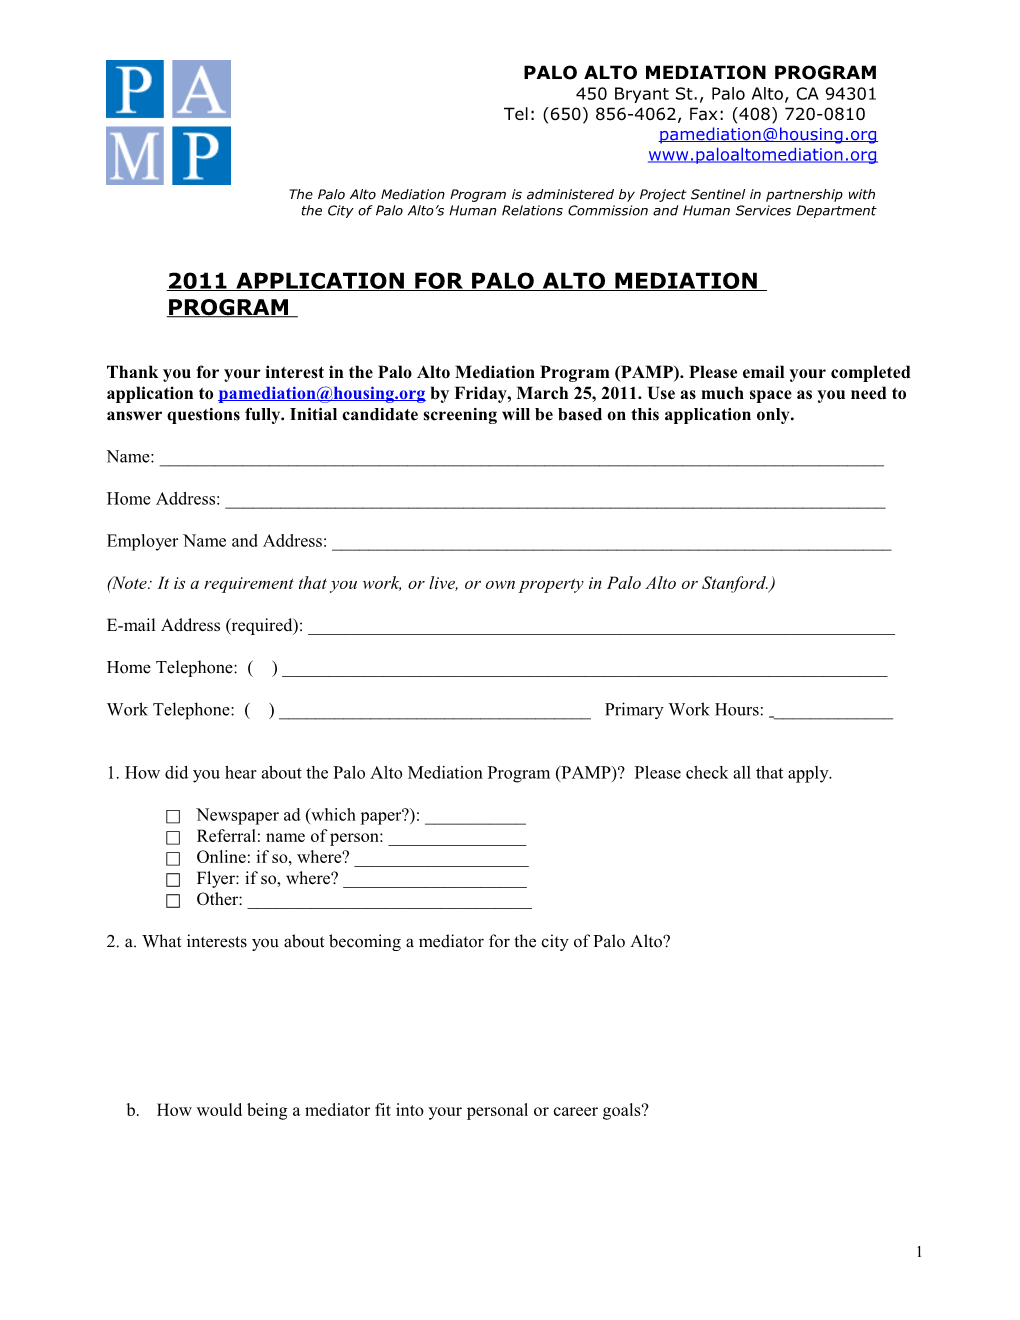 2011 Application for Palo Alto Mediation Program